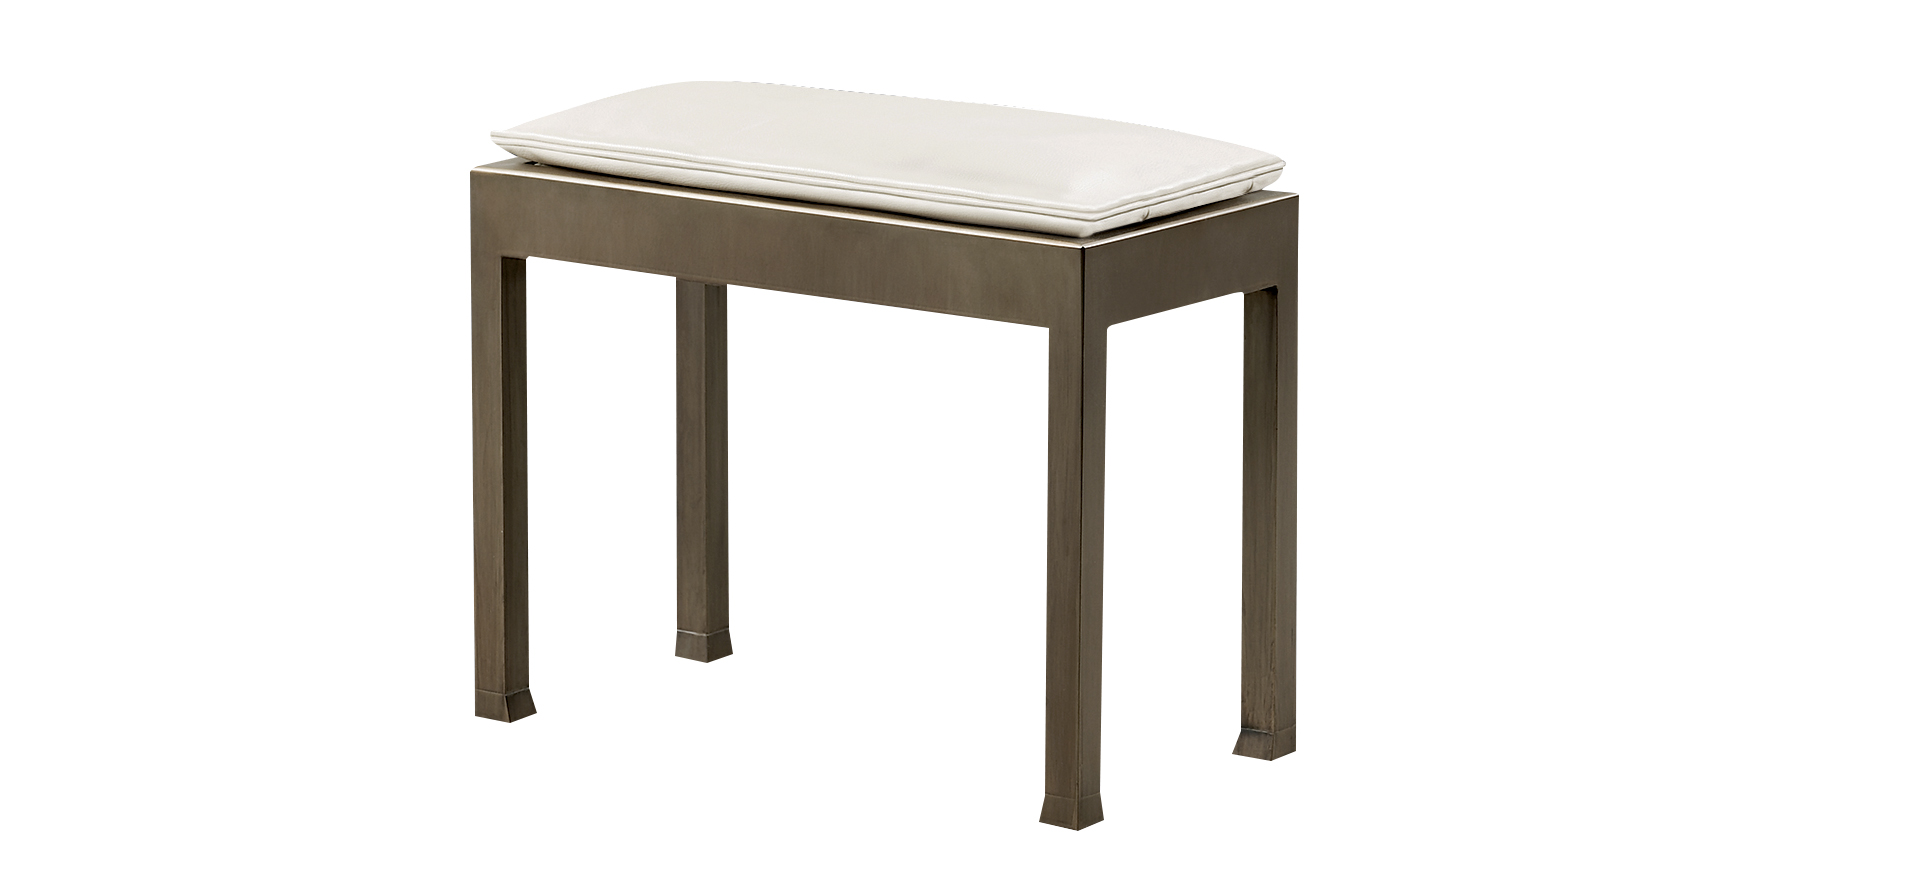 /mediaGong铜质坐凳以皮革坐垫装饰，请参见Promemoria产品目录|Promemoria